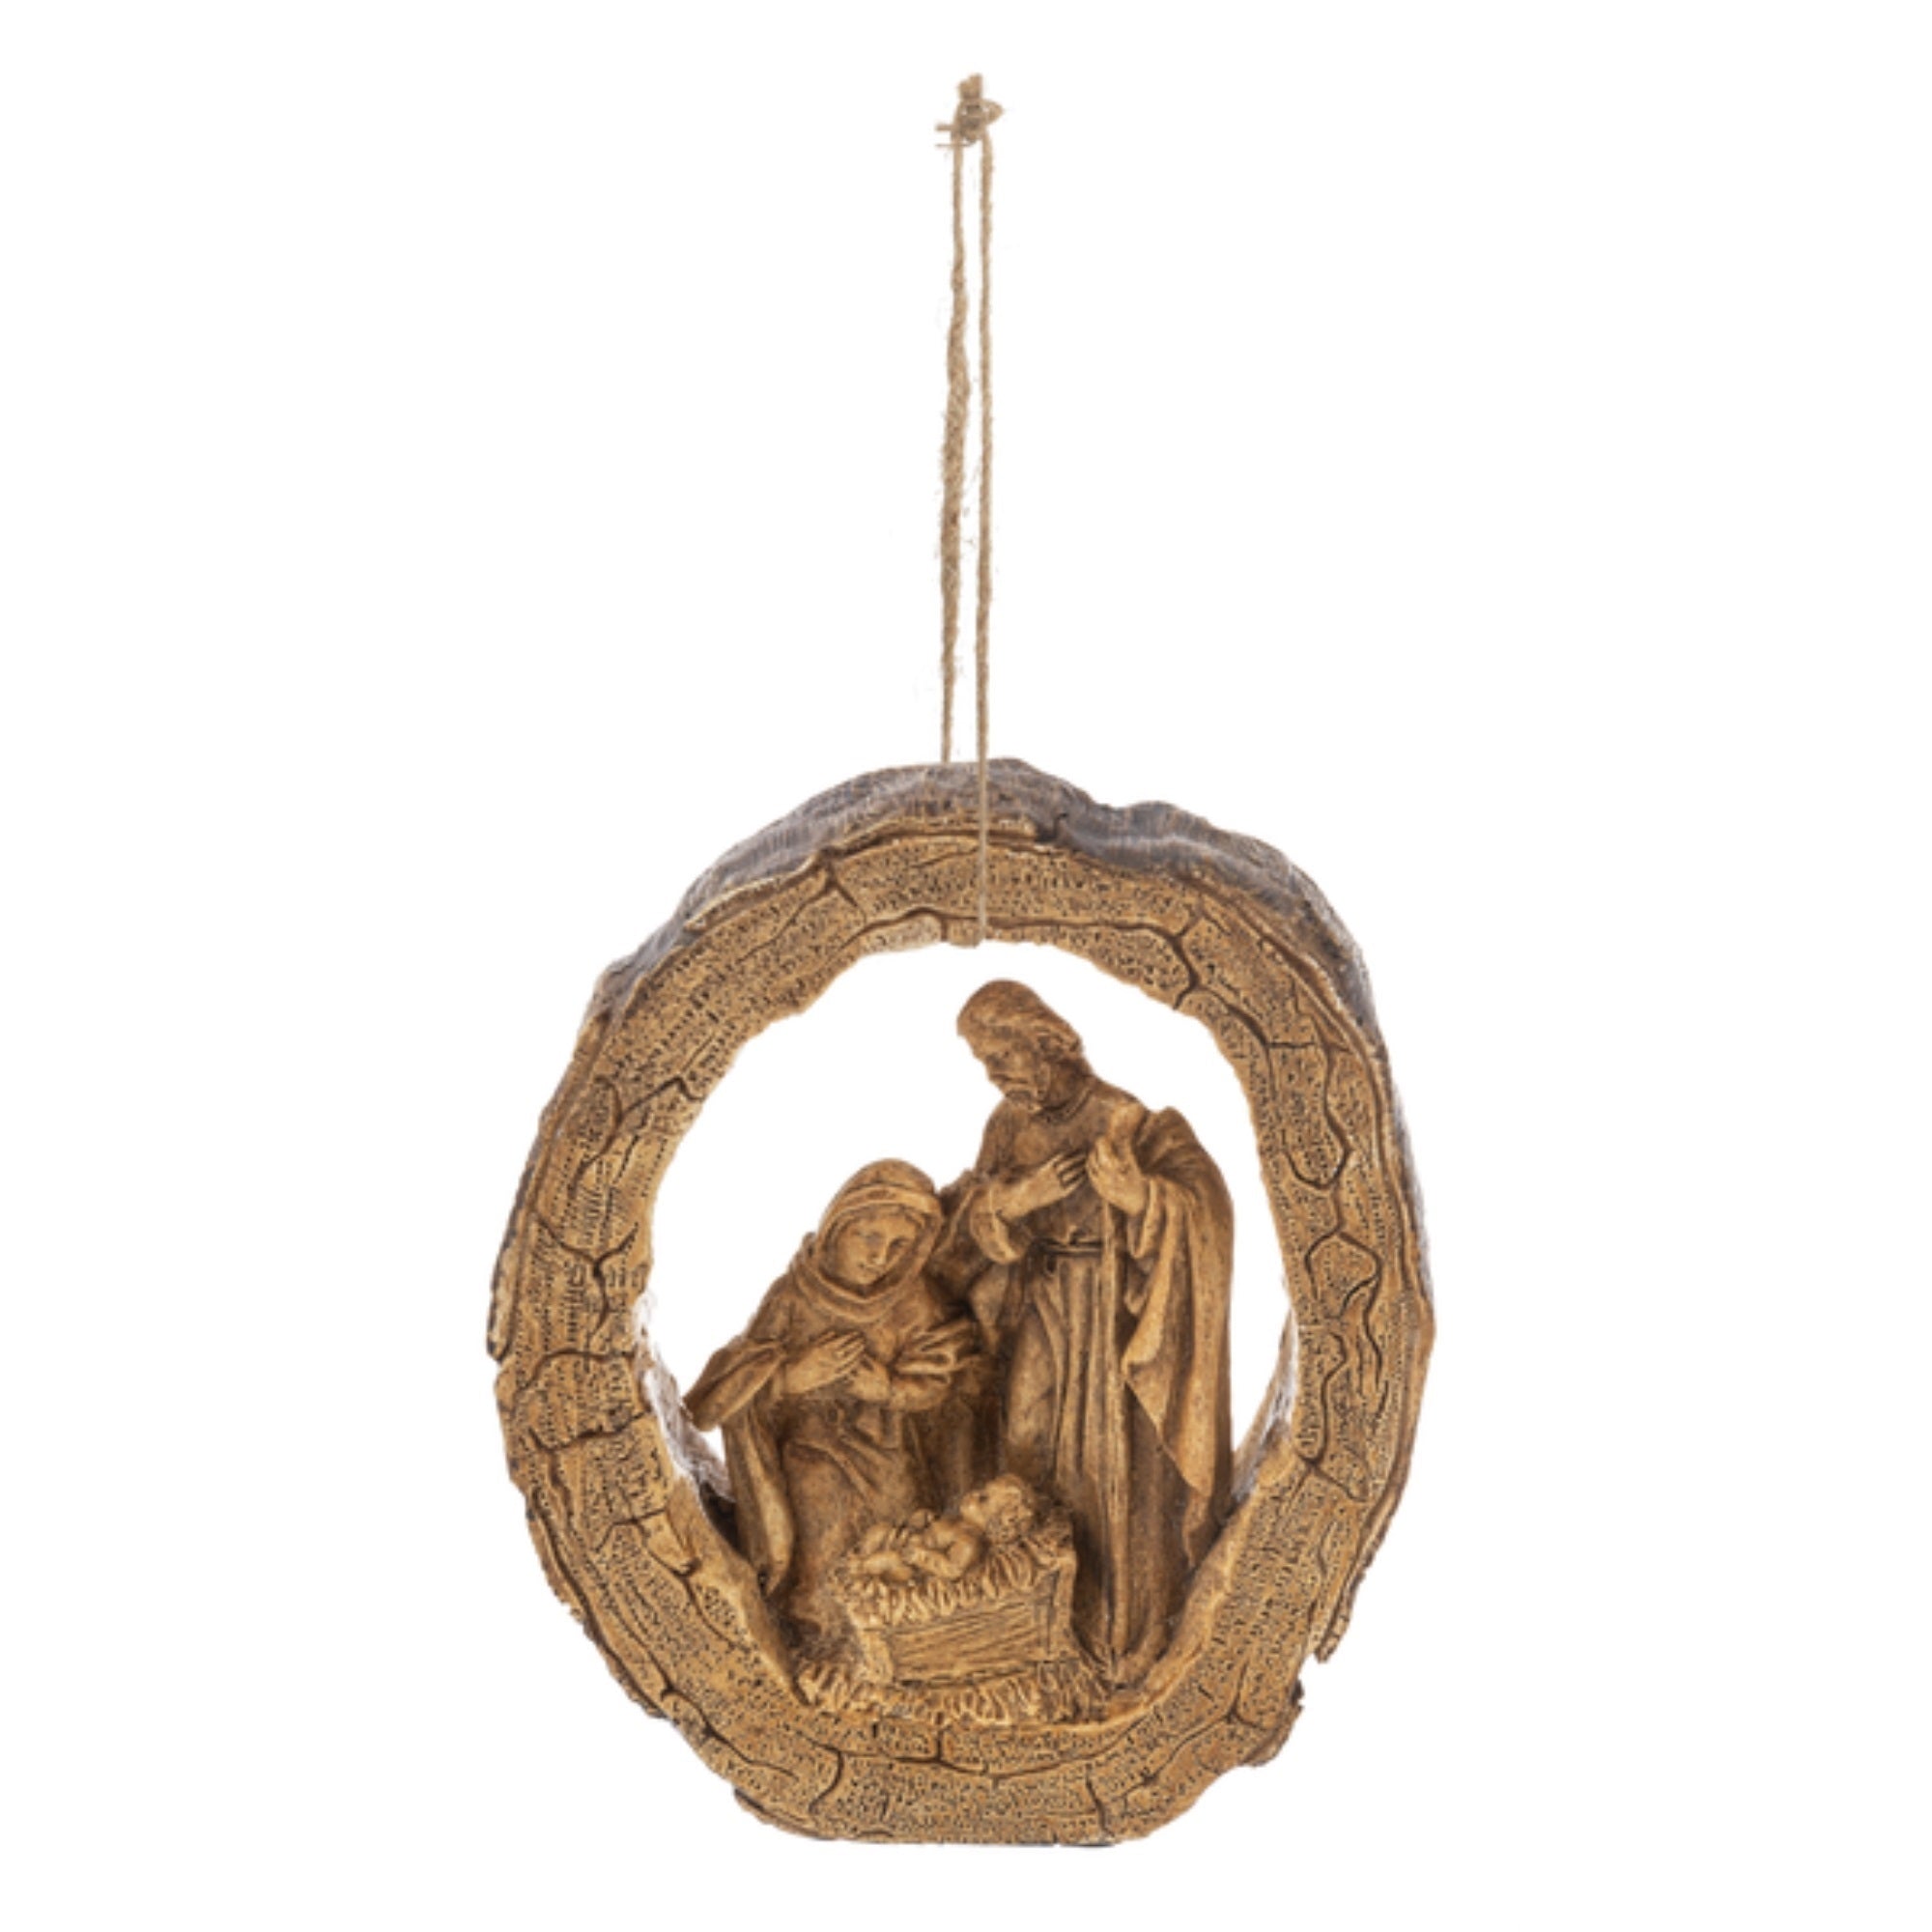 Ganz Log Nativity Figurine Christmas Ornament, Brown, 5"